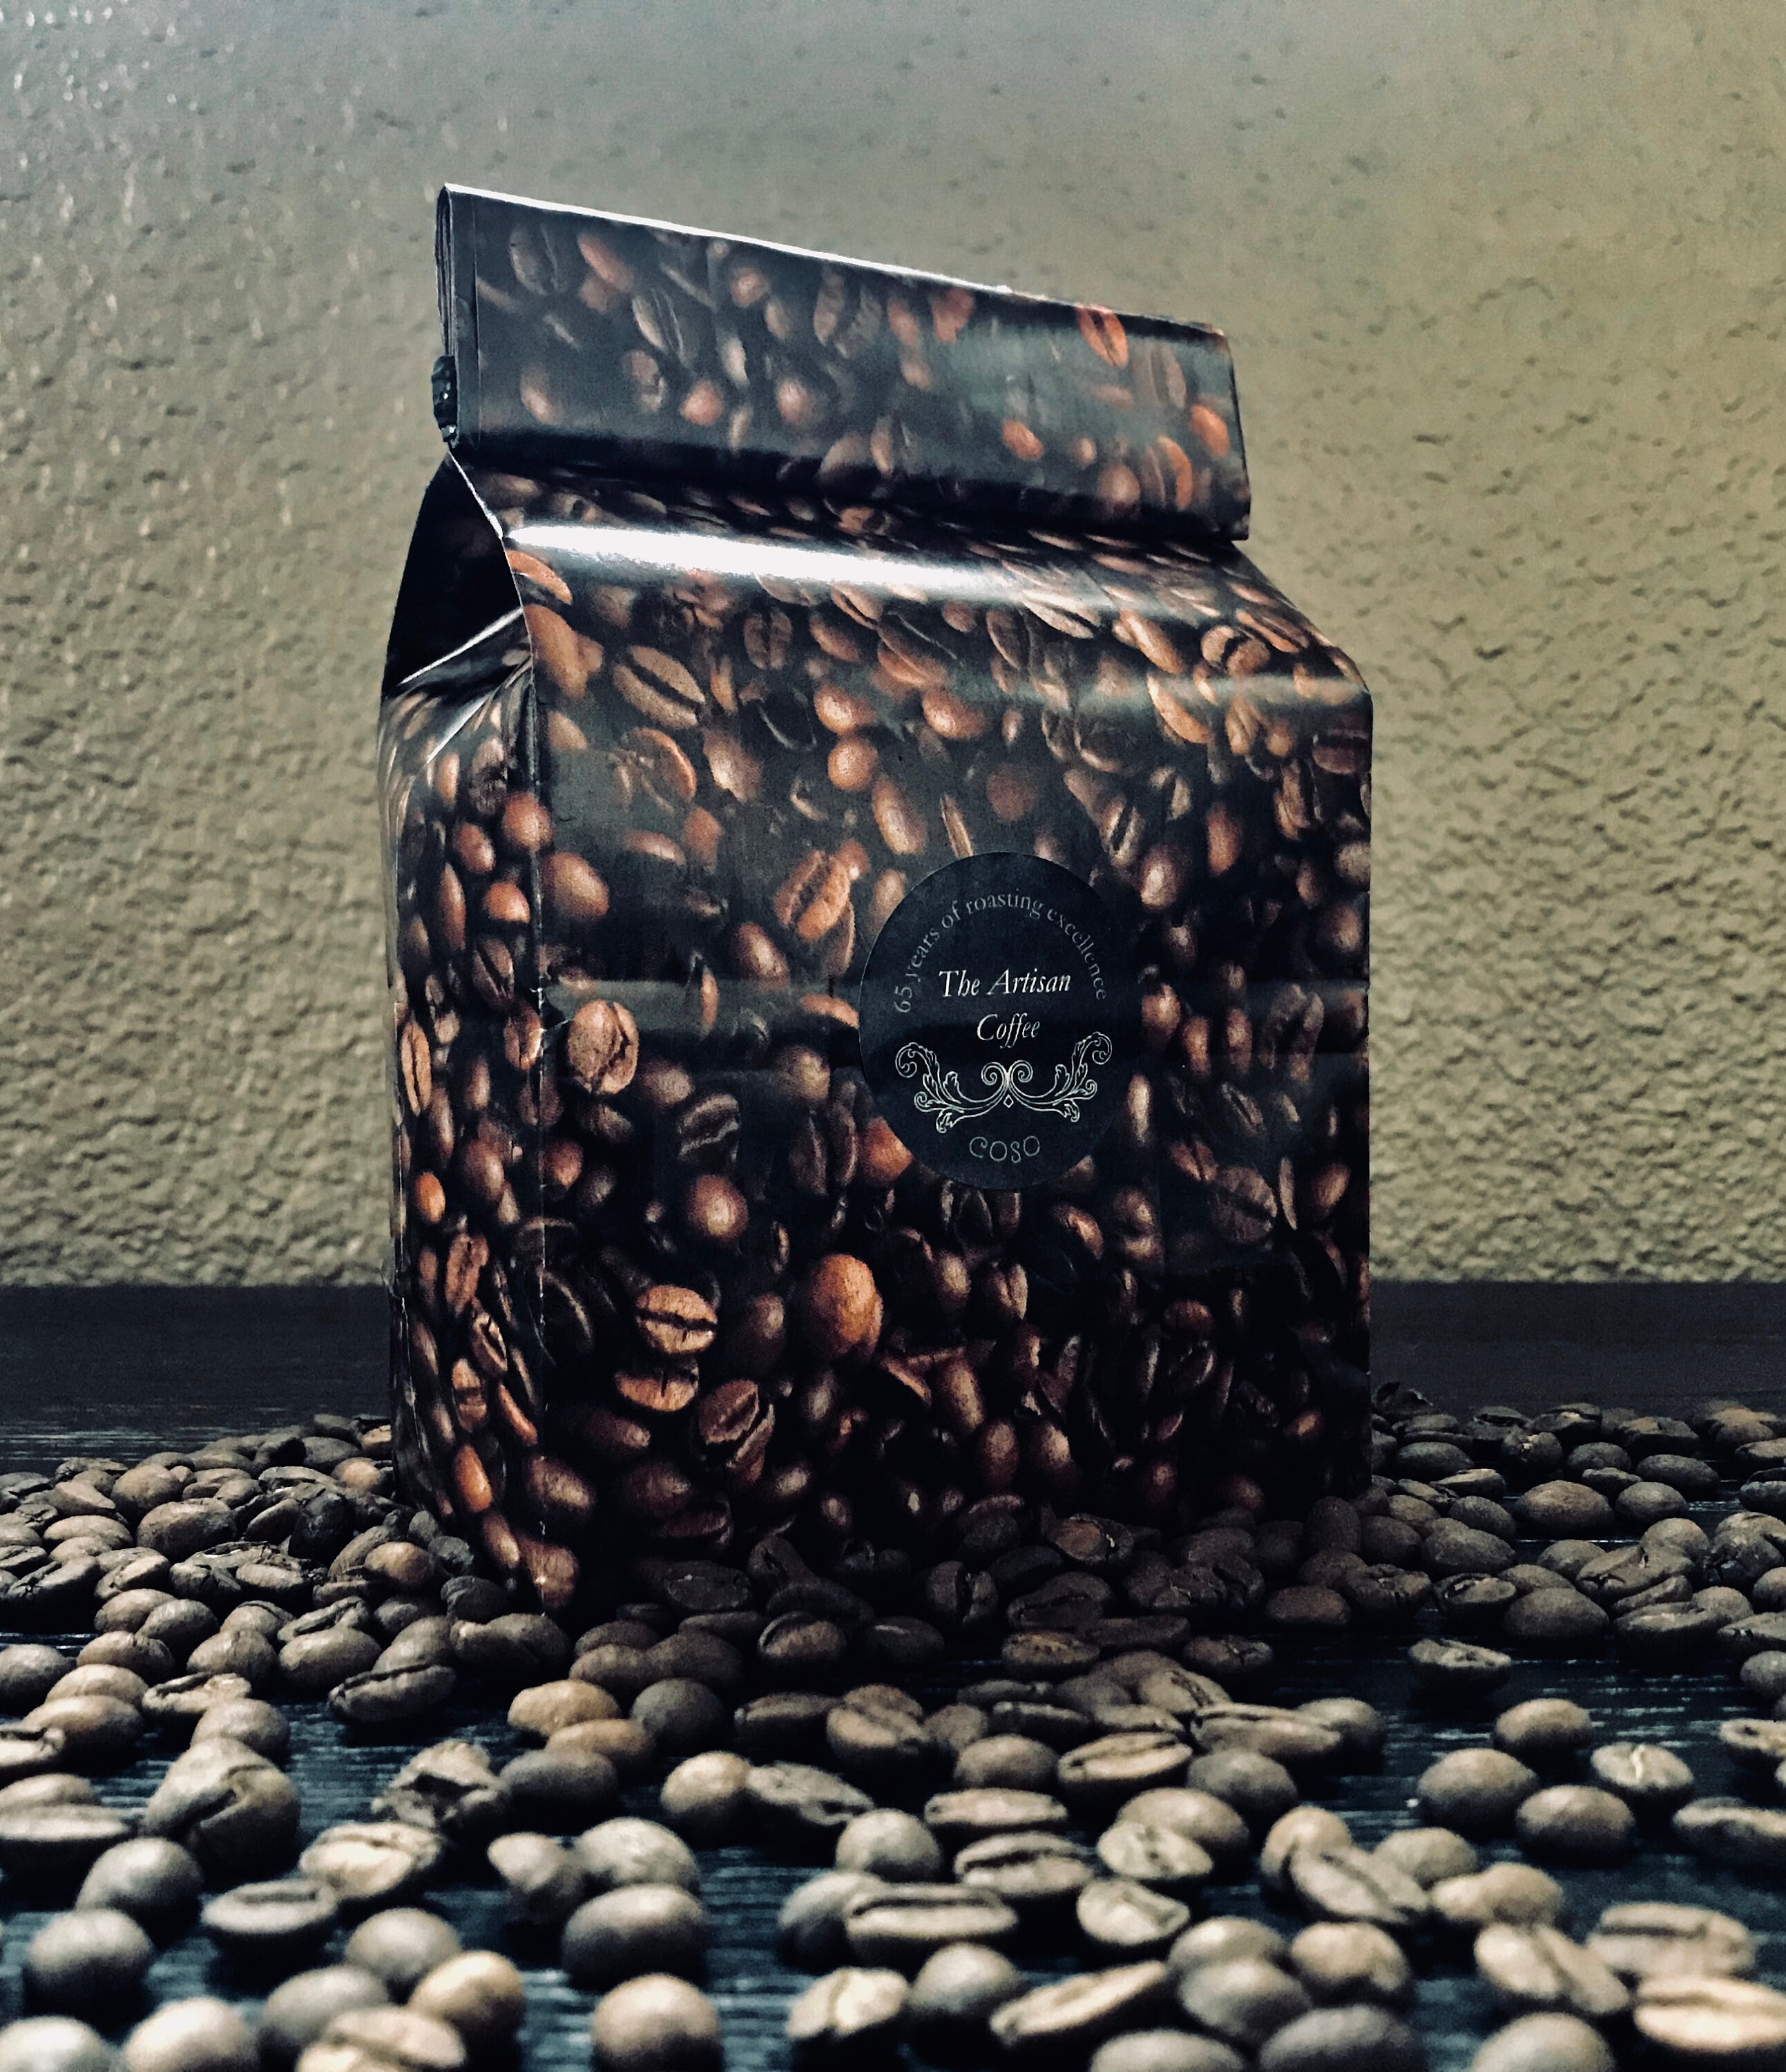 Automatic Indian Filter Coffee Maker Starter Kit bundle Offer 